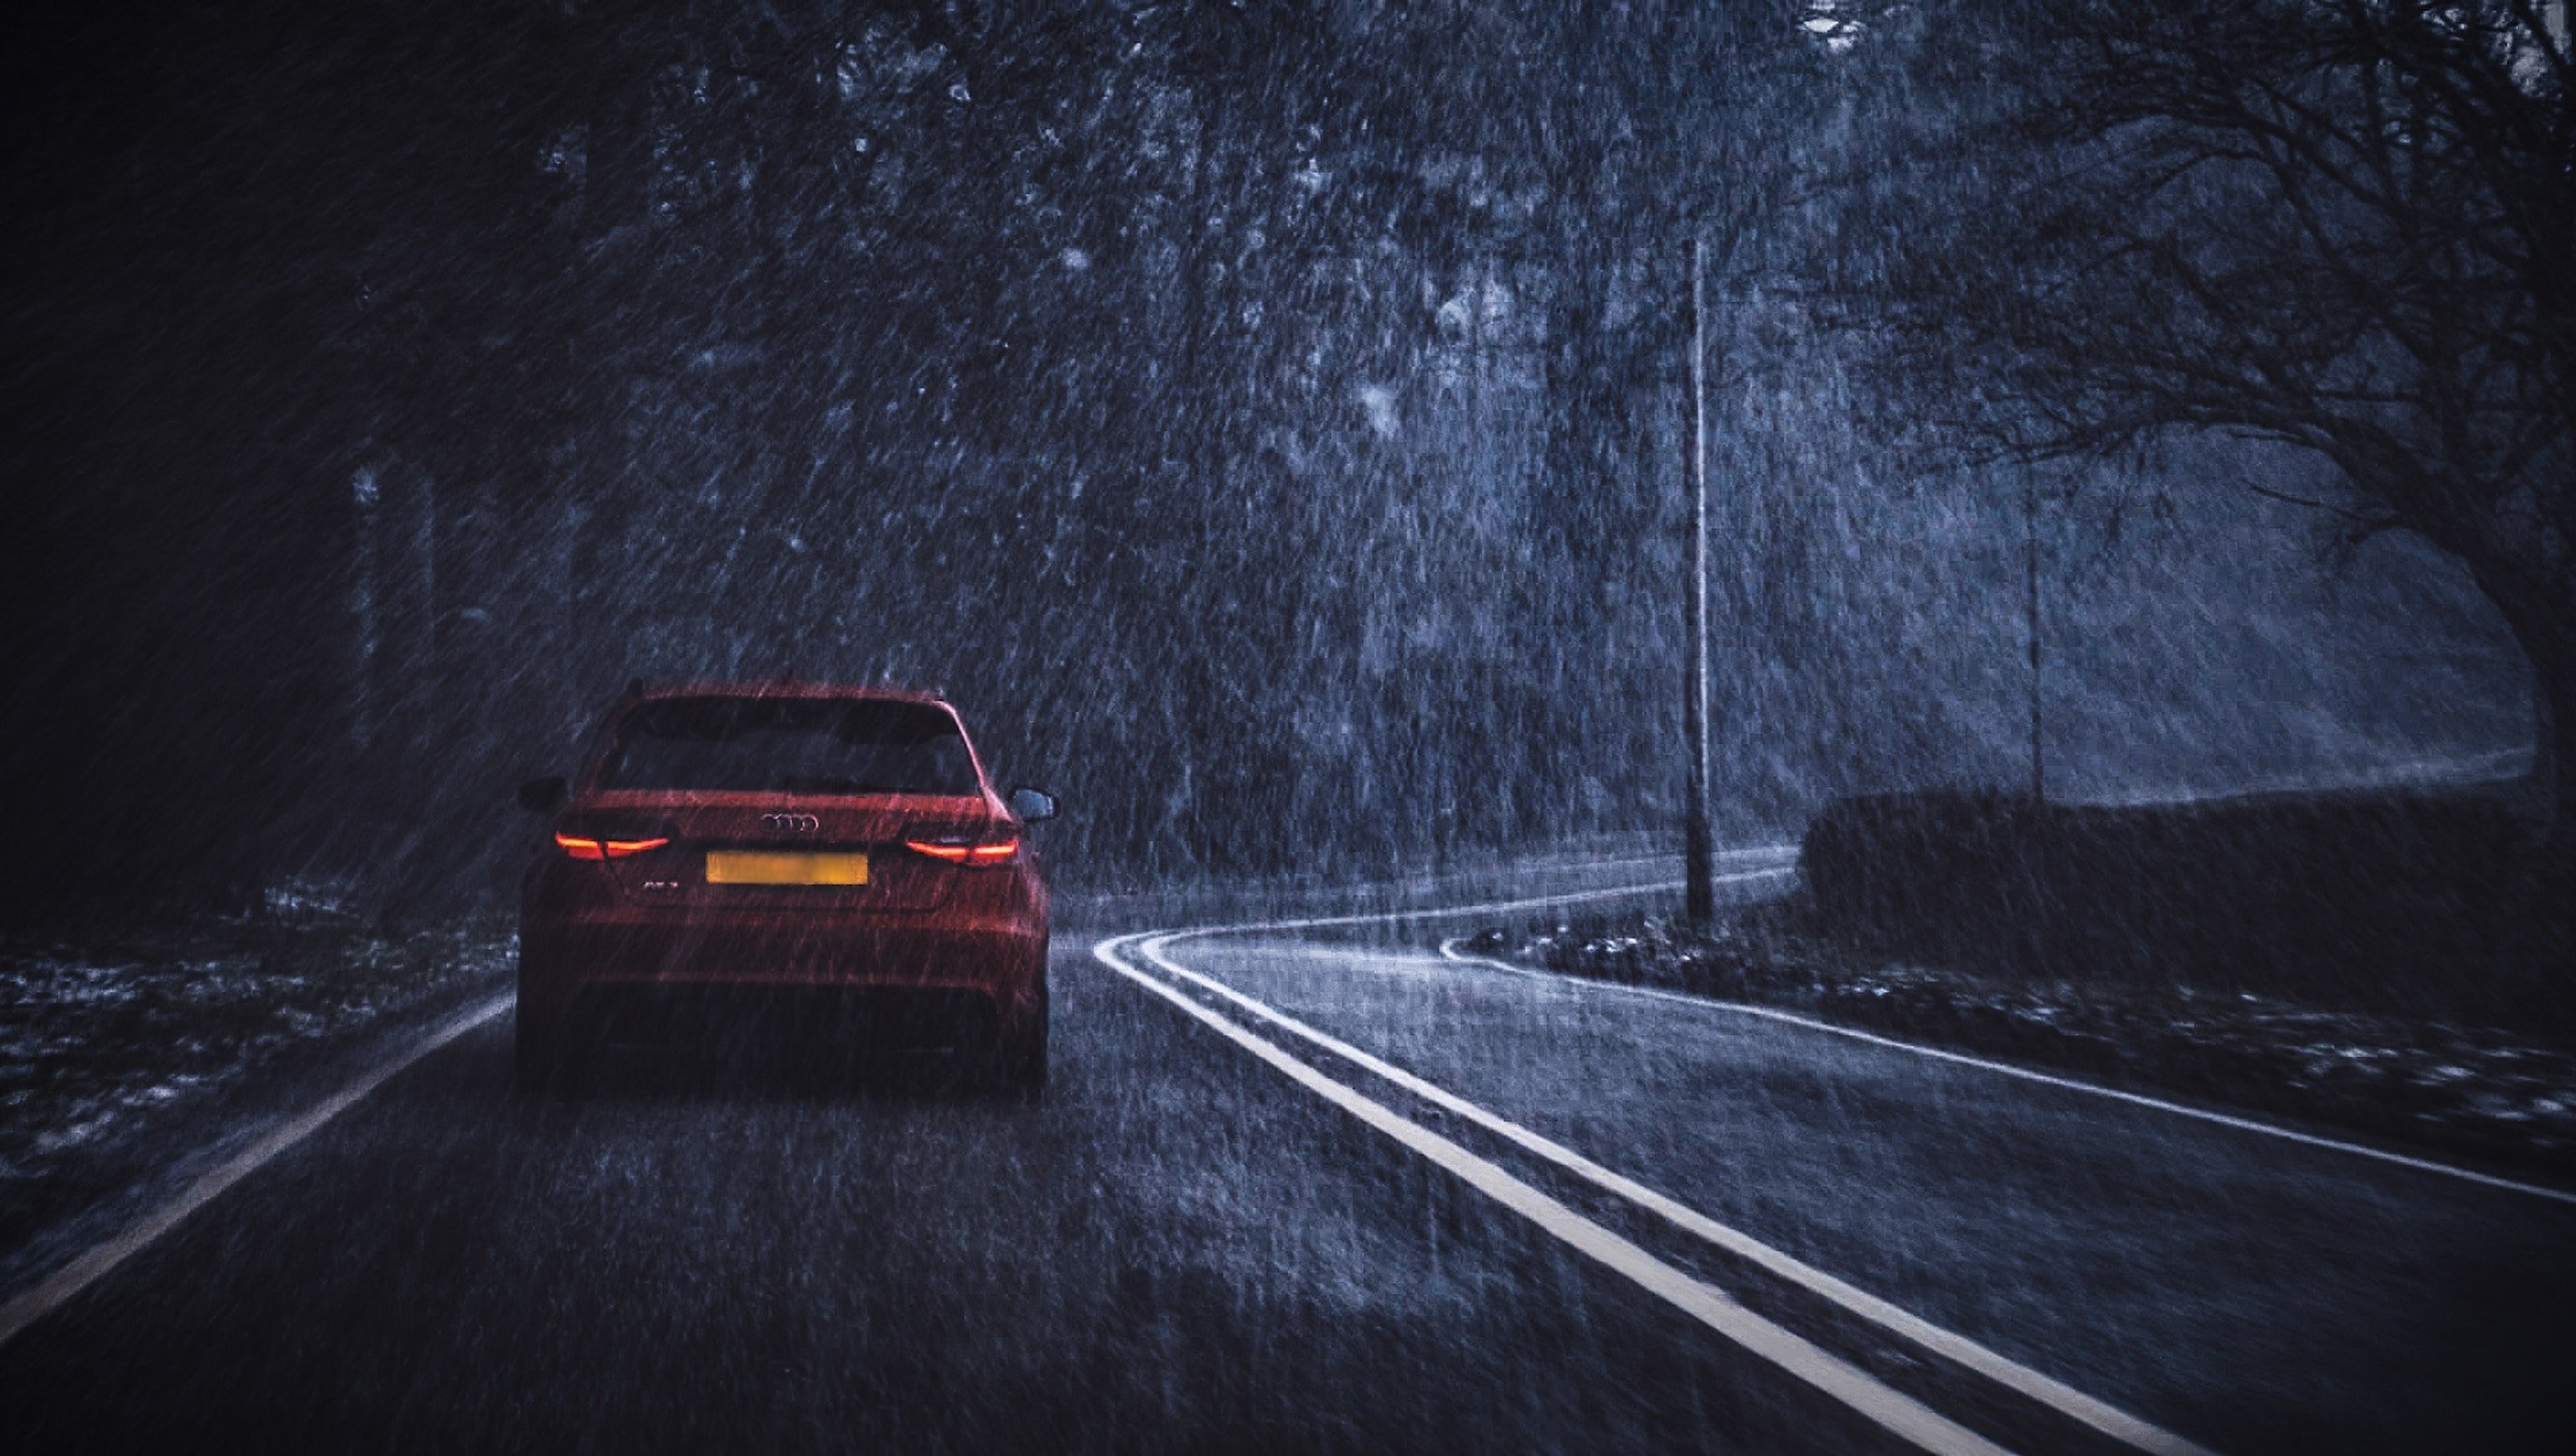 Days 8 nights. Машина под дождем. Машина ночь дождь. Машина ночью на дороге. Дорога дождь машина.